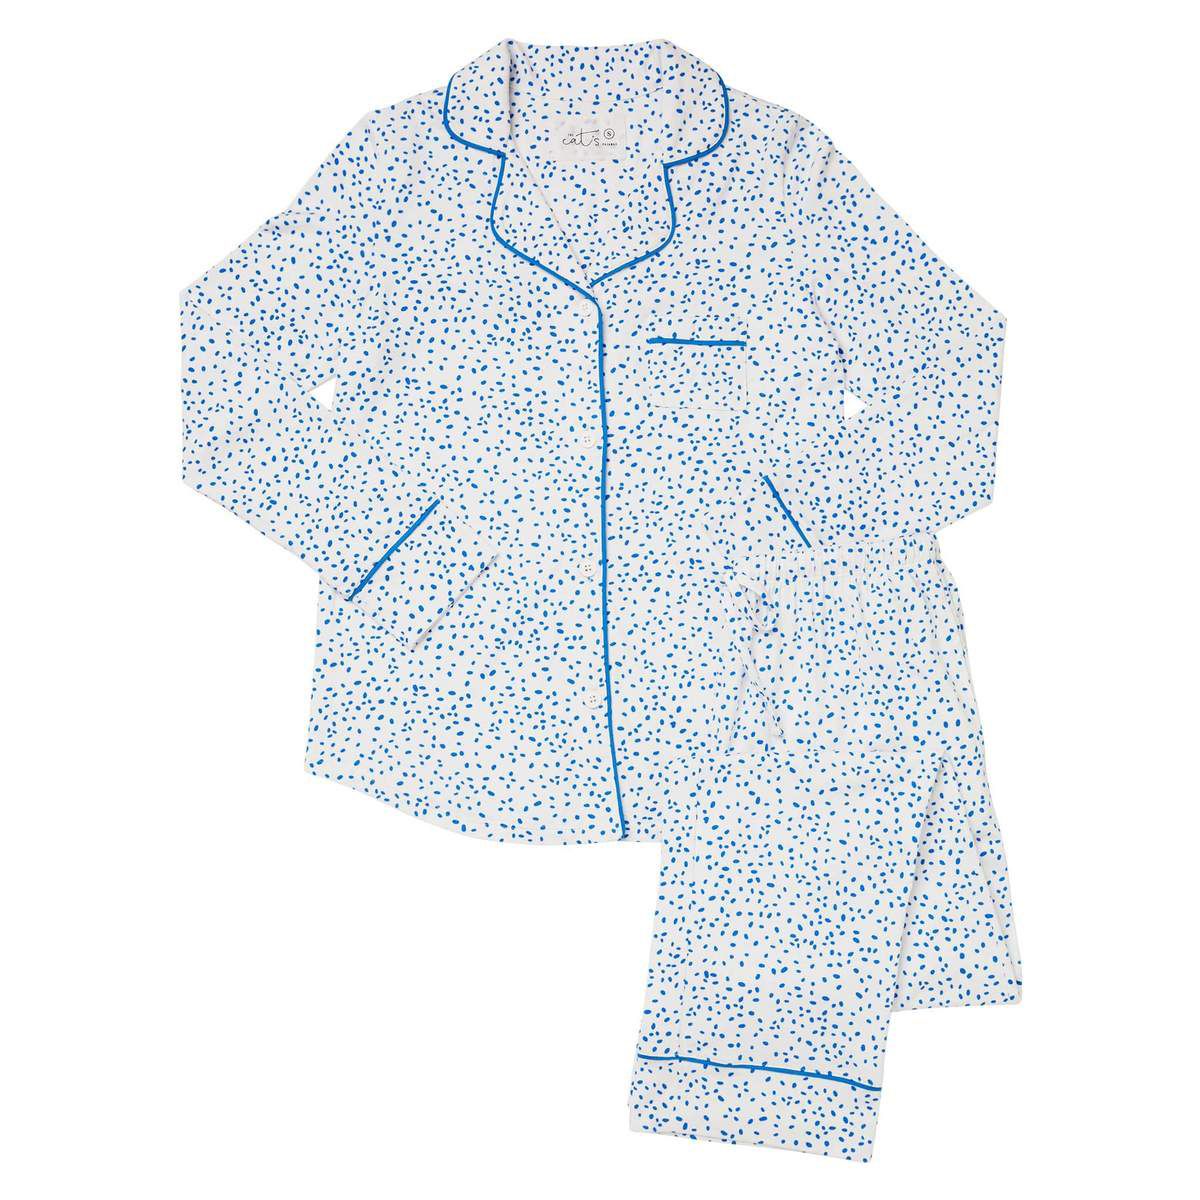 Bästa presenterna till mormor - The Cat’s Pyjamas Confetti Dot Pima Knit Pyjamas Set